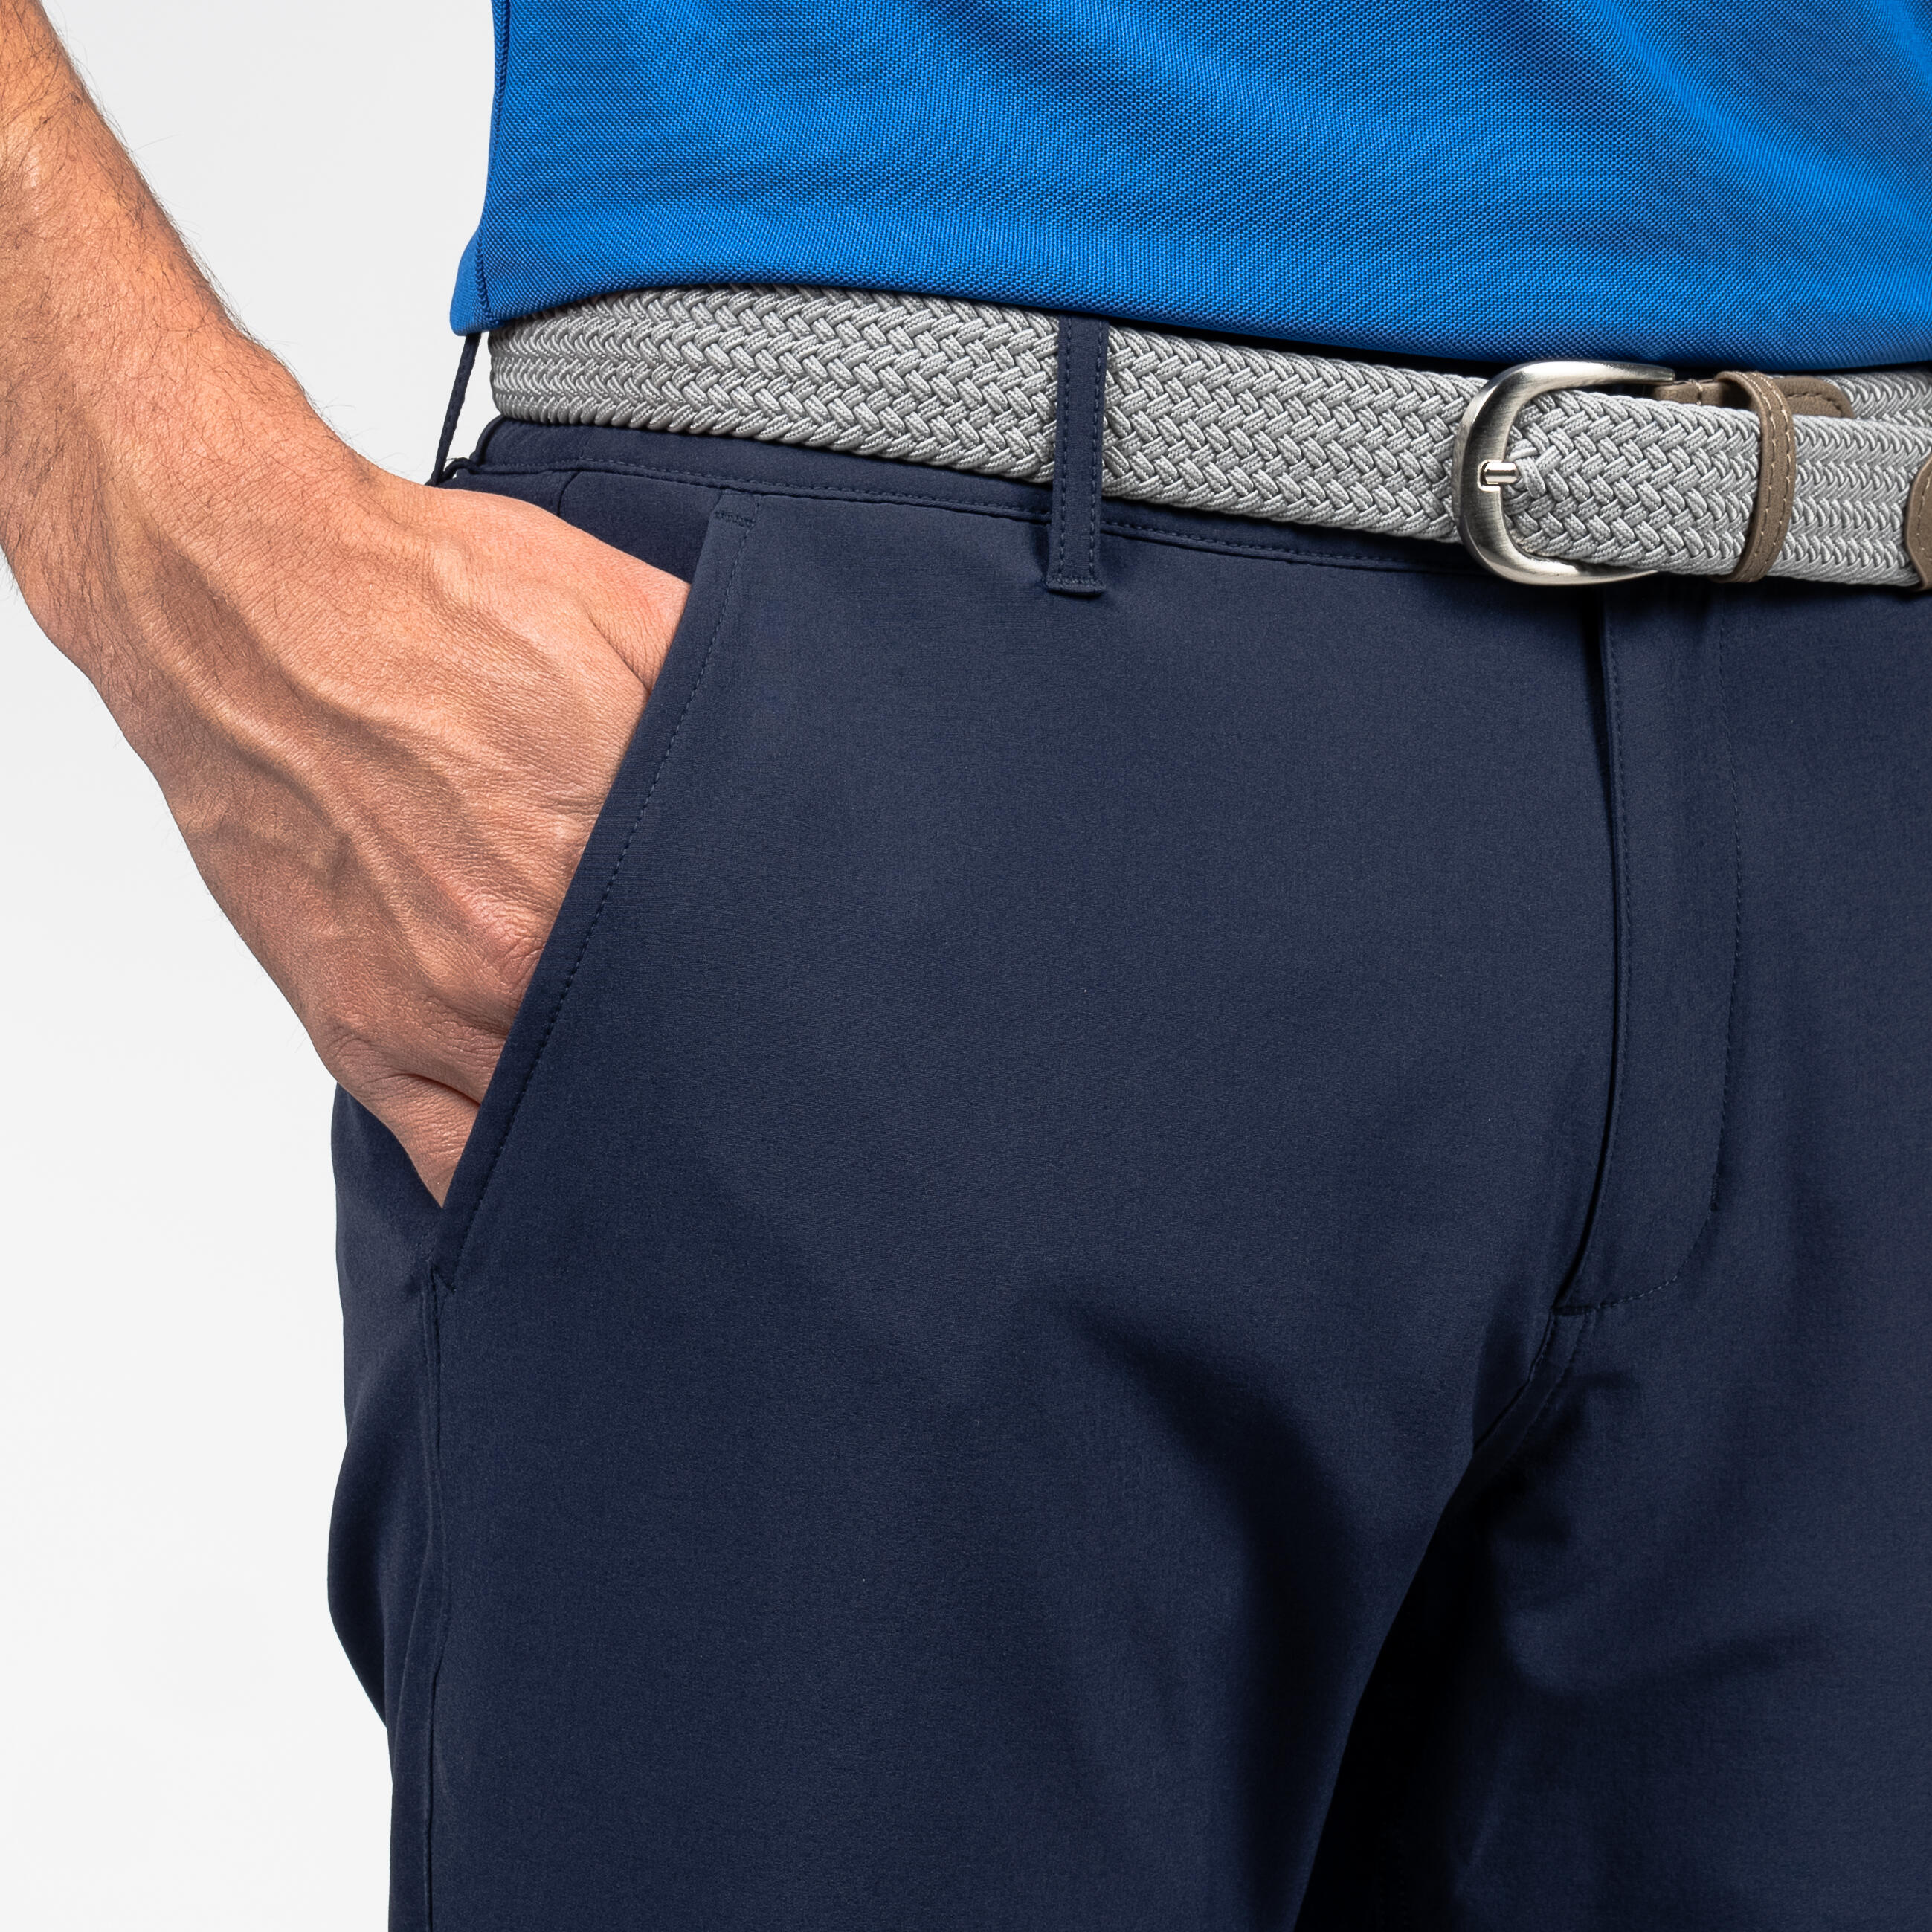 Pantalon de golf homme – WW 500 bleu marine - INESIS